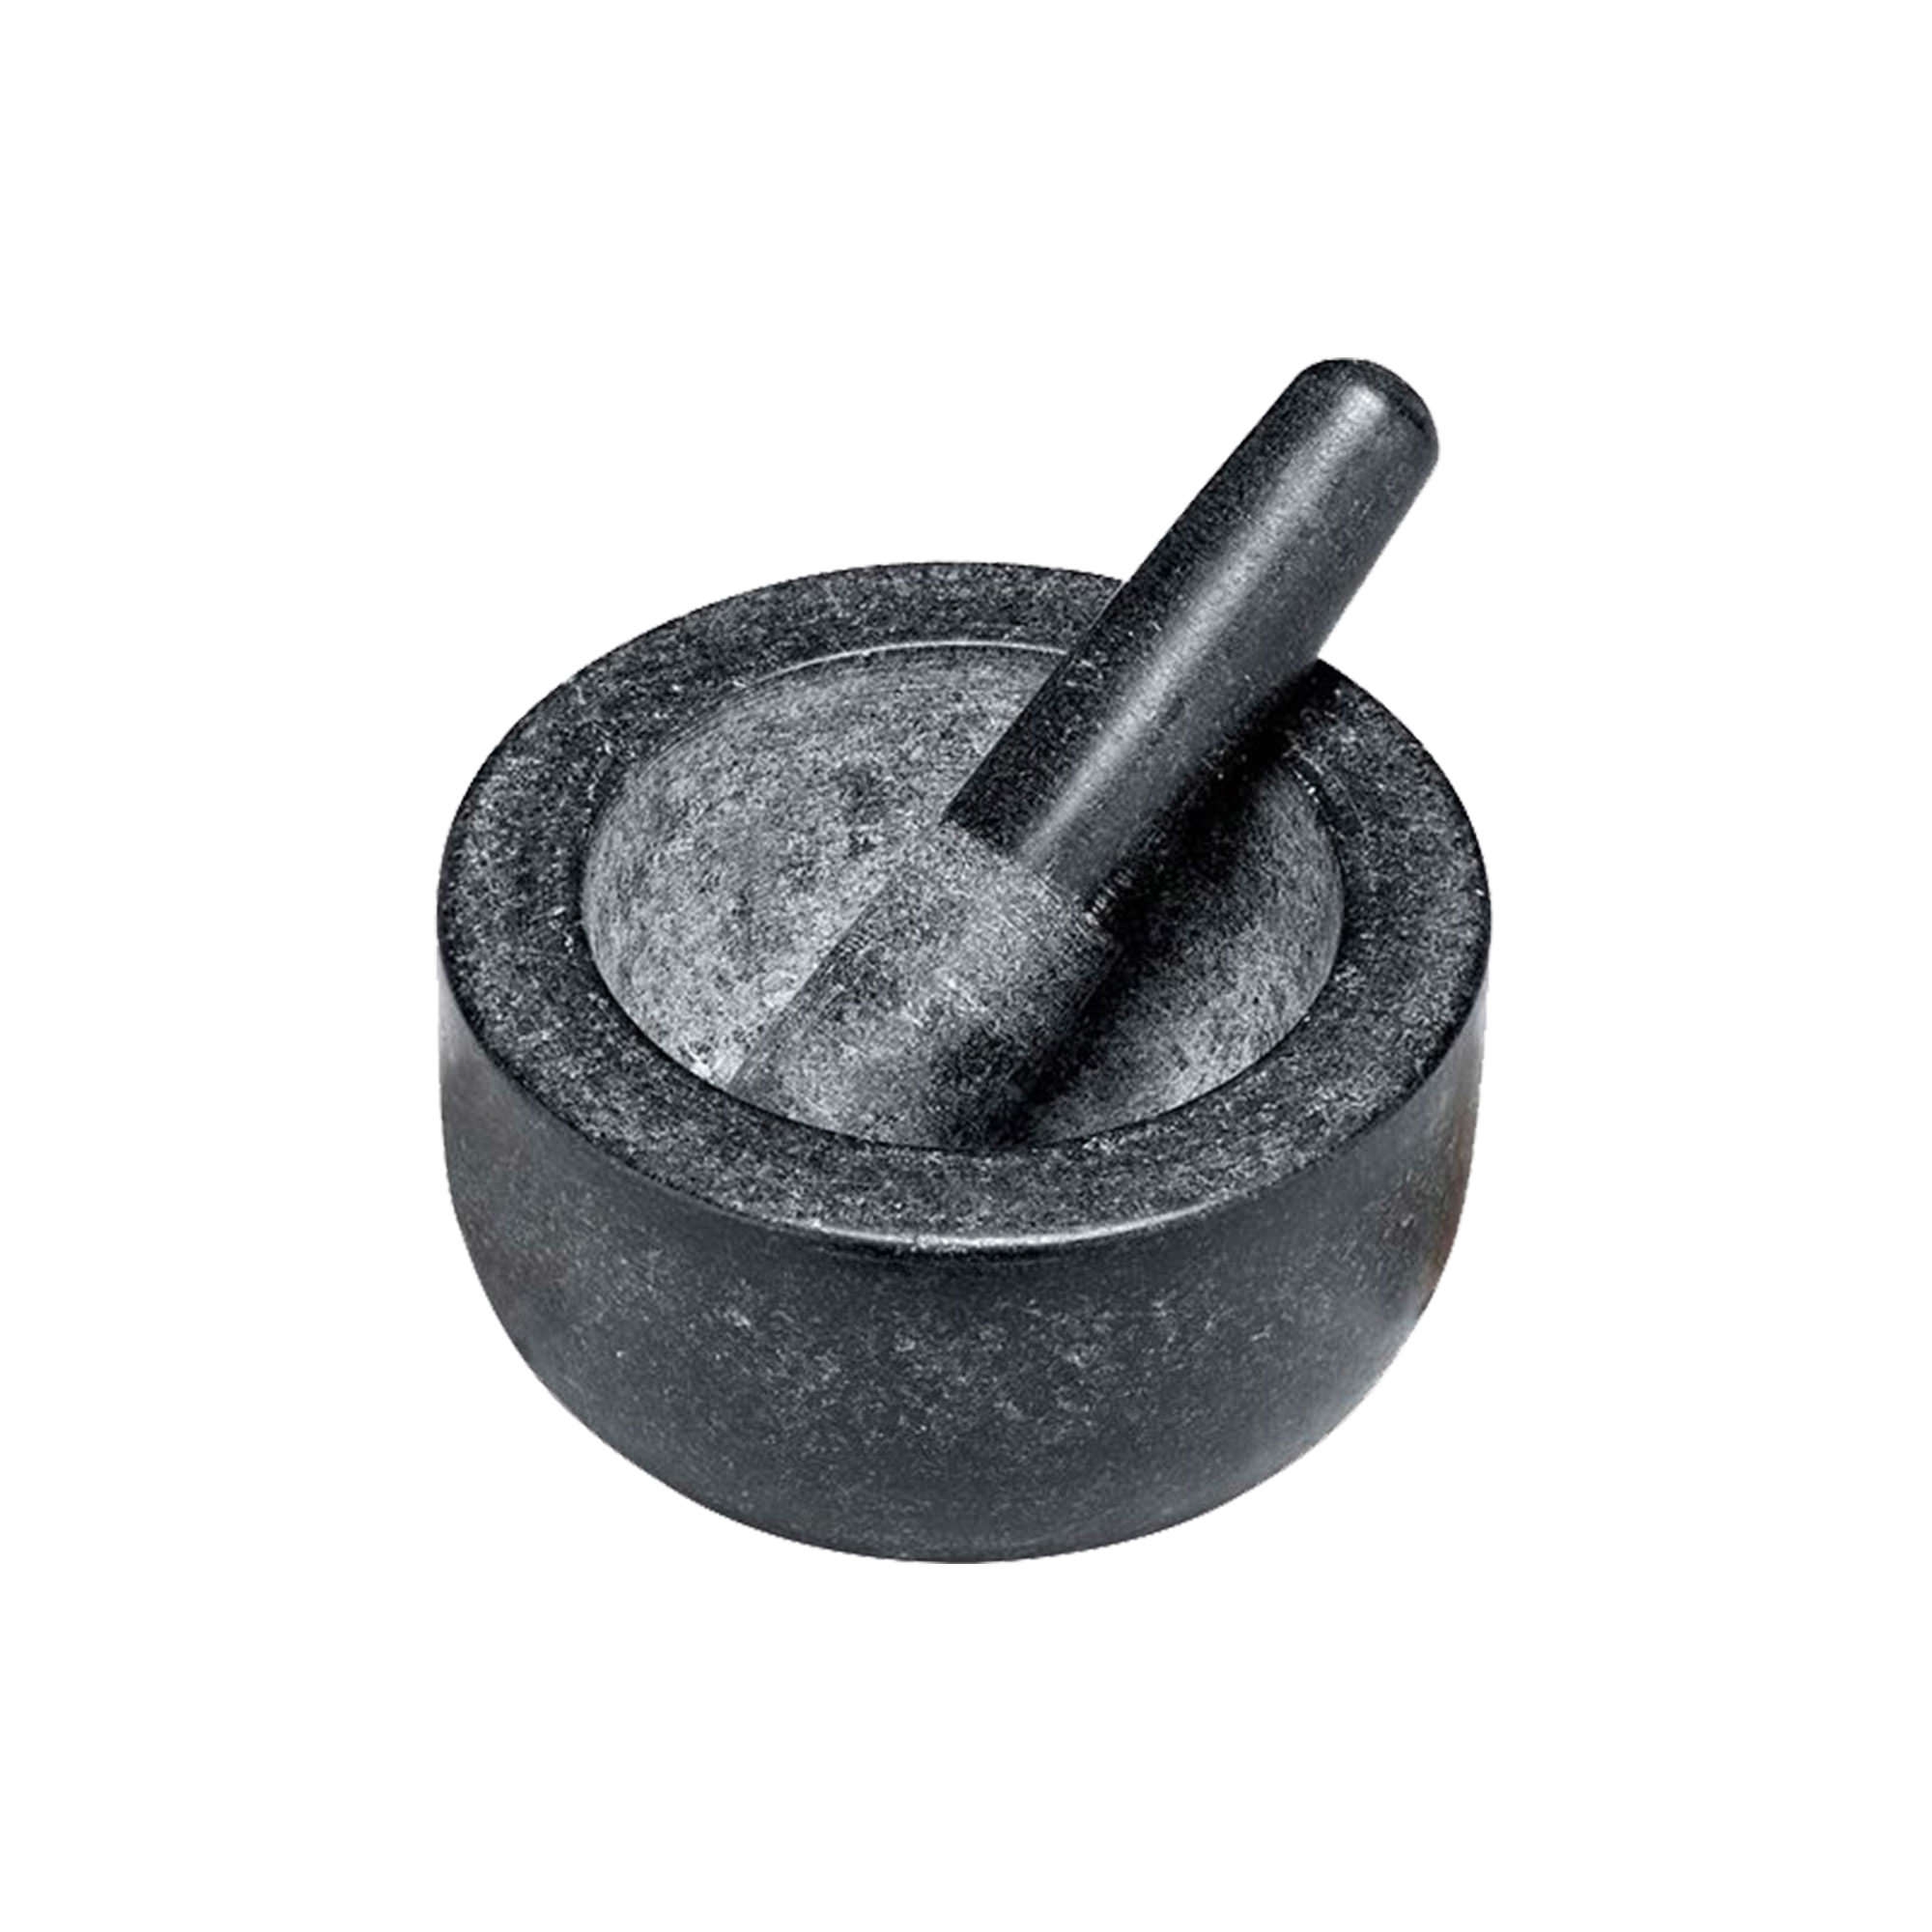 Avanti Low Profile Mortar and Pestle 20cm Black Image 1